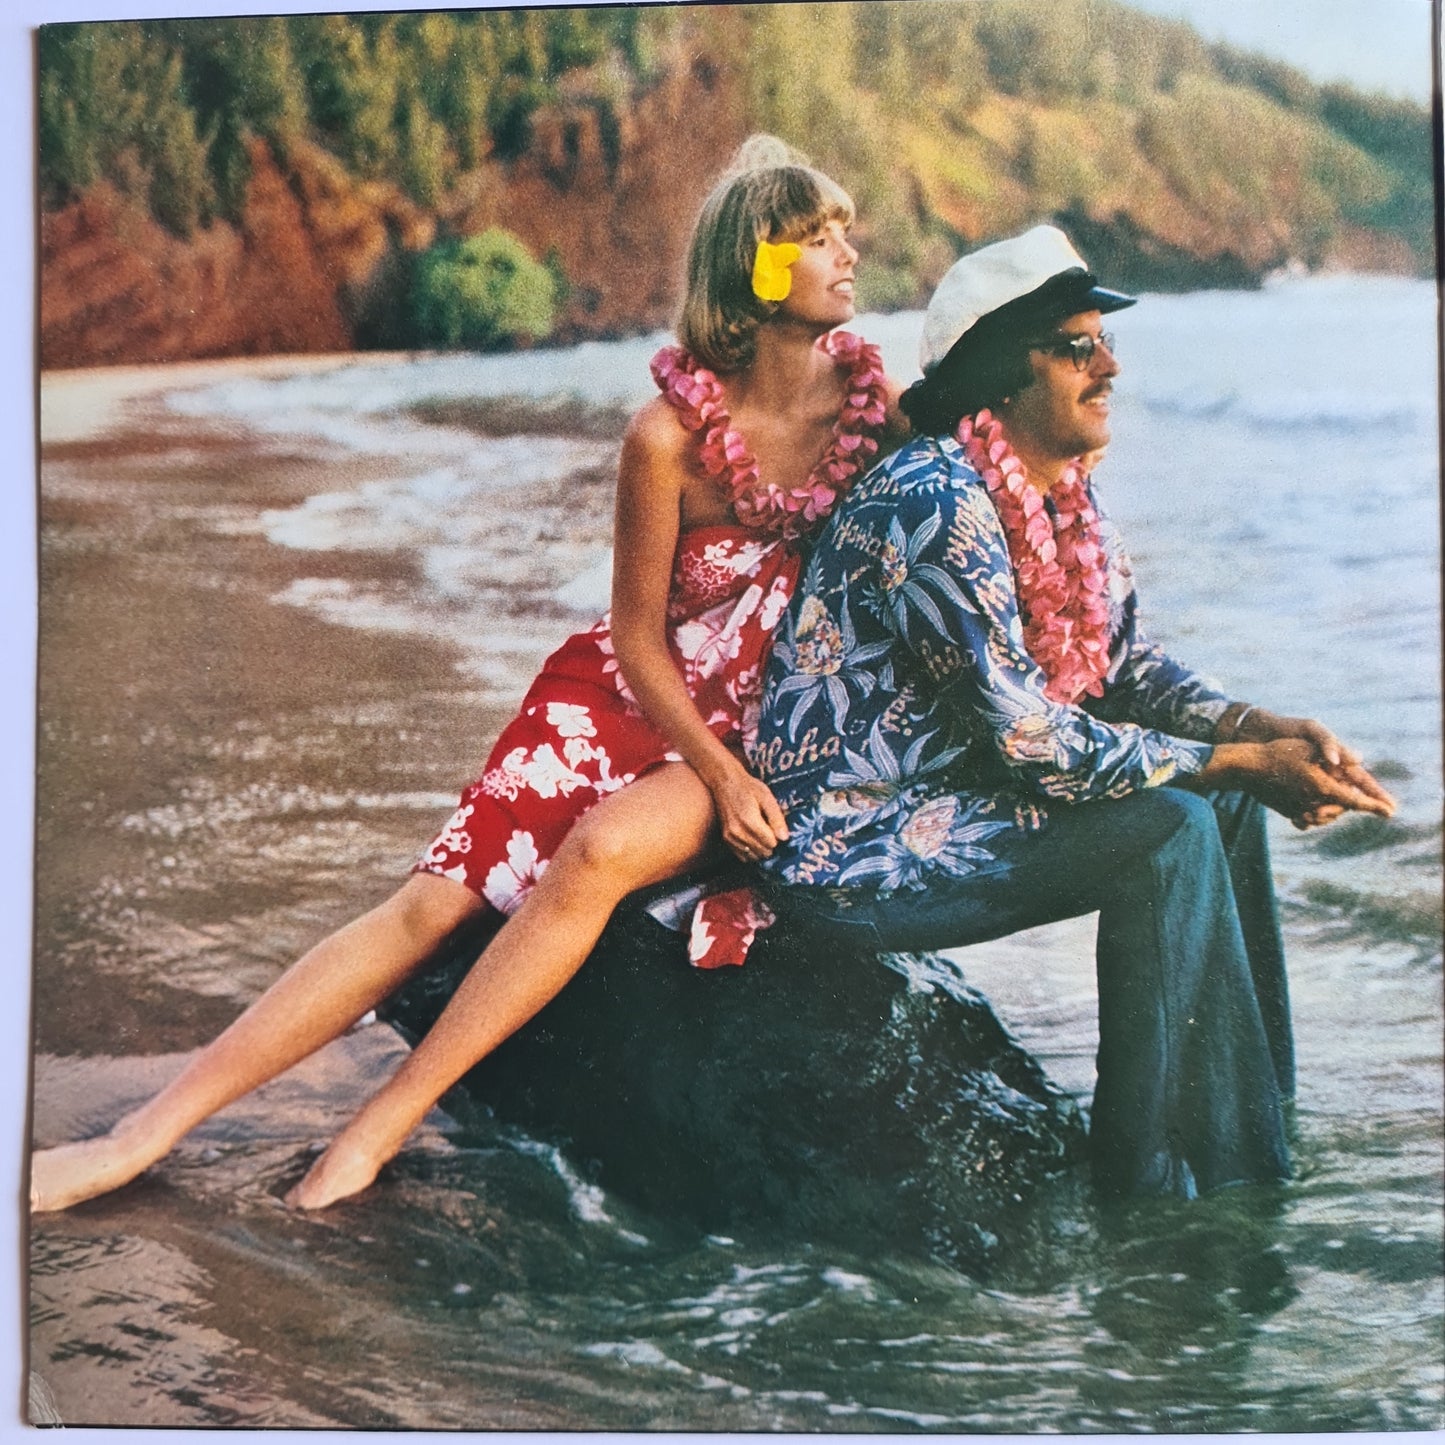 Captain & Tennille – Greatest hits - 1977 (Gatefold) - Vinyl Record